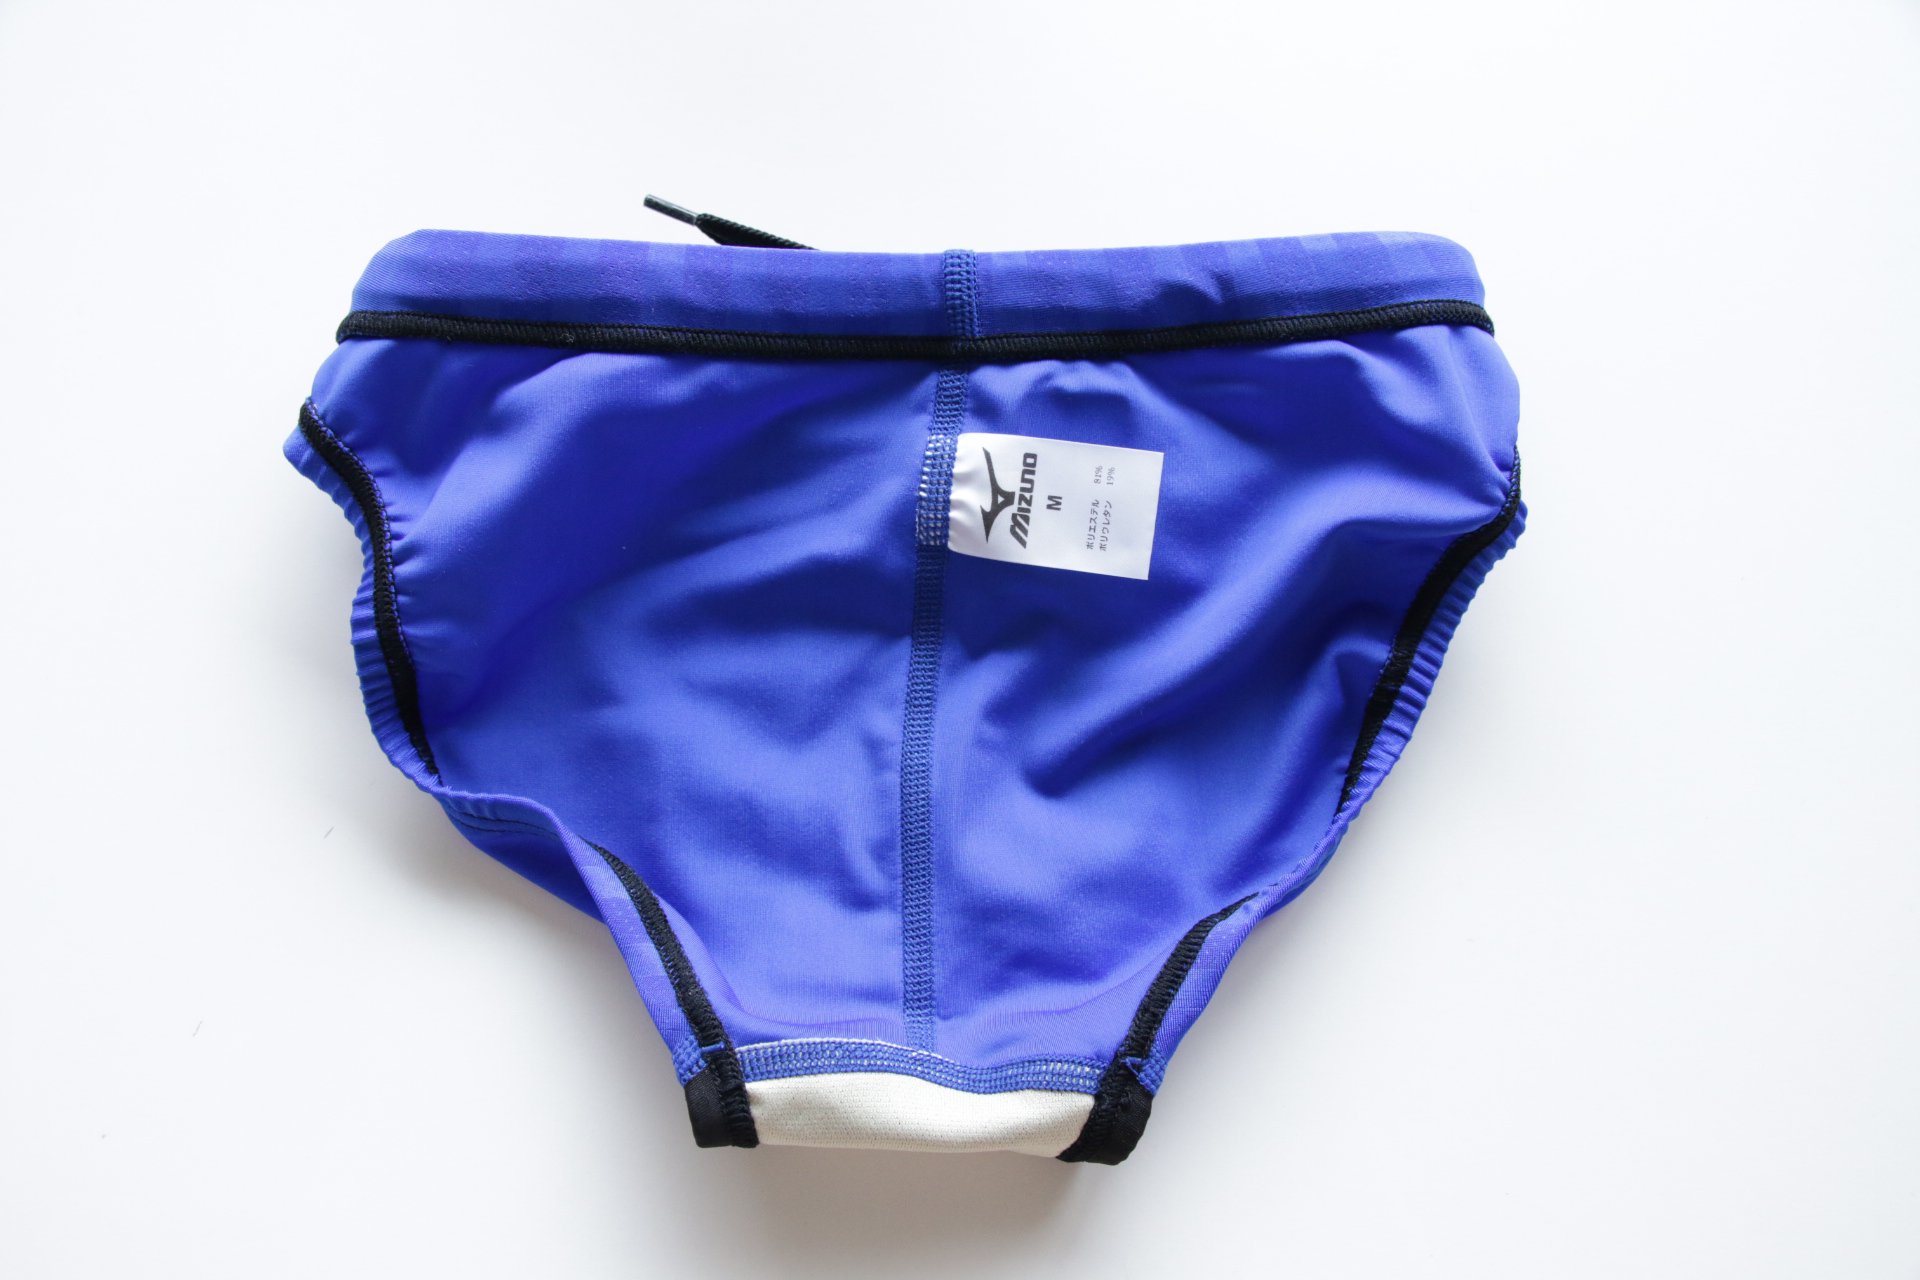 Mizuno Men's Swimwear Stream Aqucela Brief Black/Blue 09x27xE45